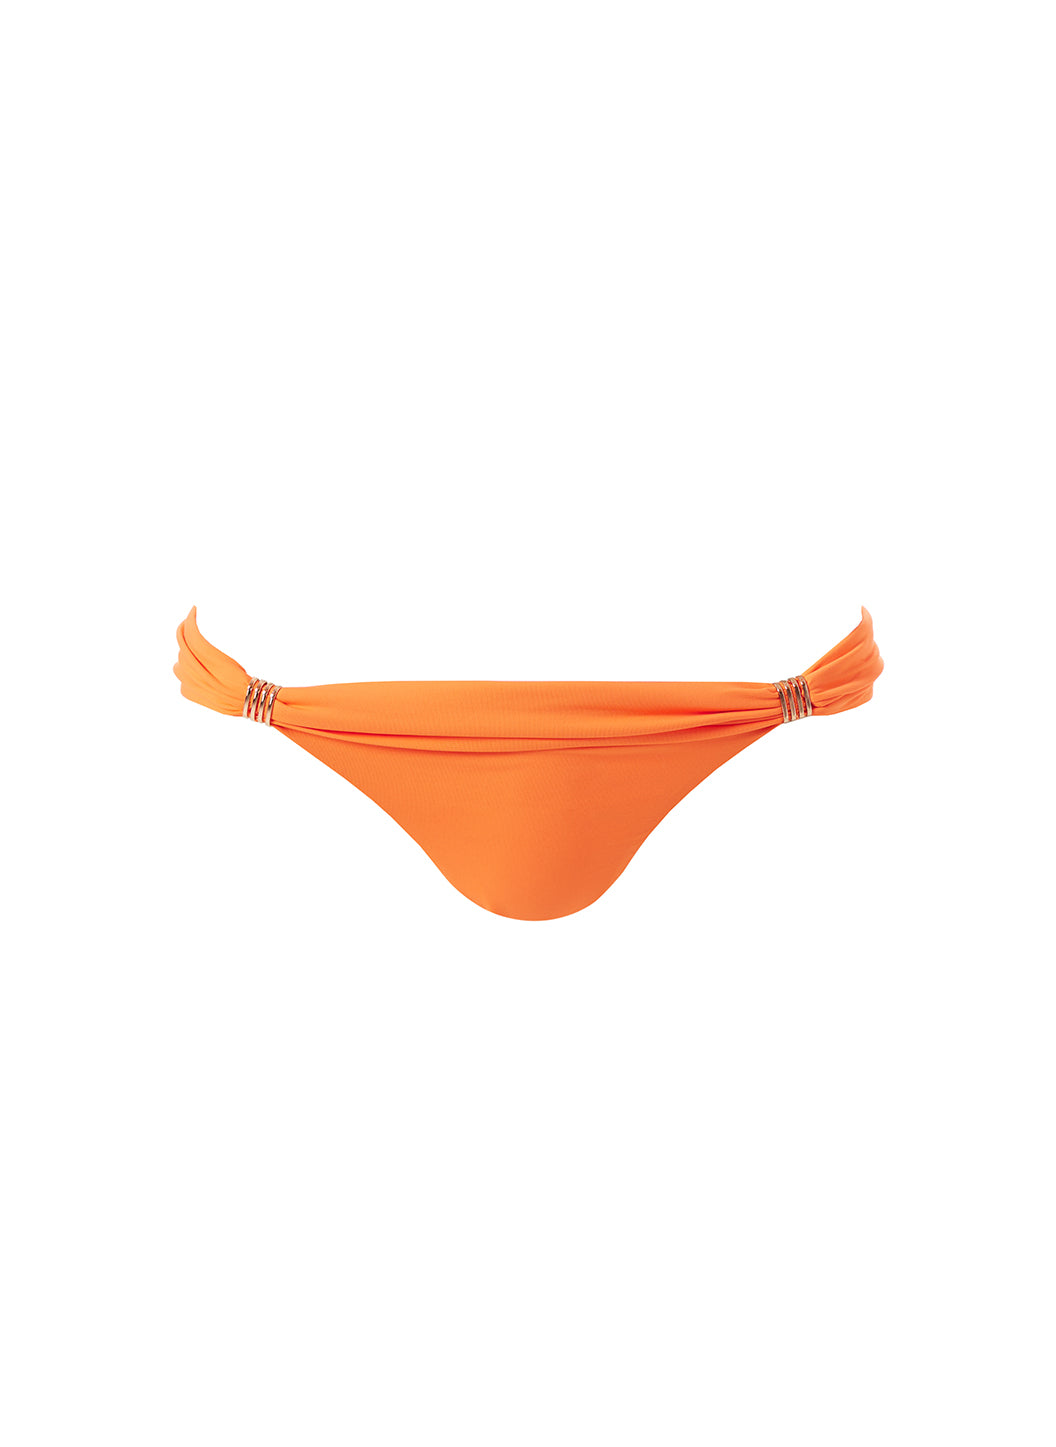 Exclusive Grenada Orange Bikini Bottom